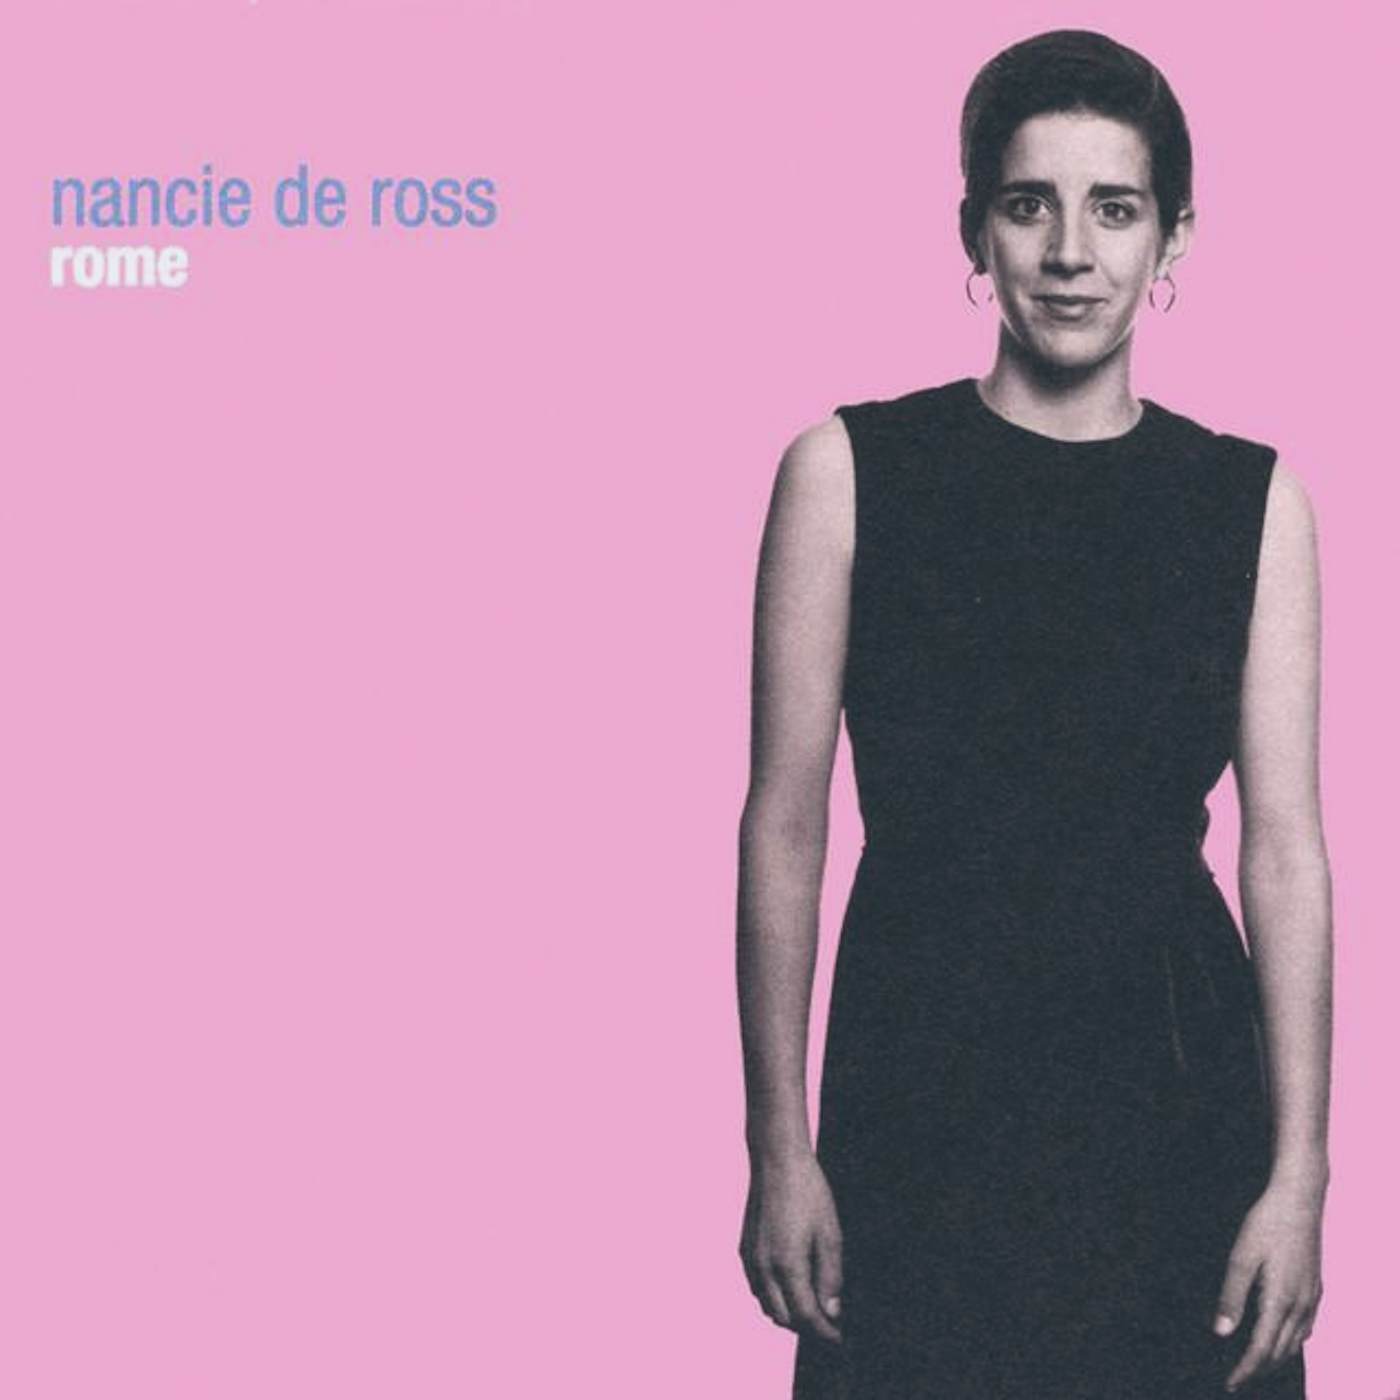 Nancie de Ross